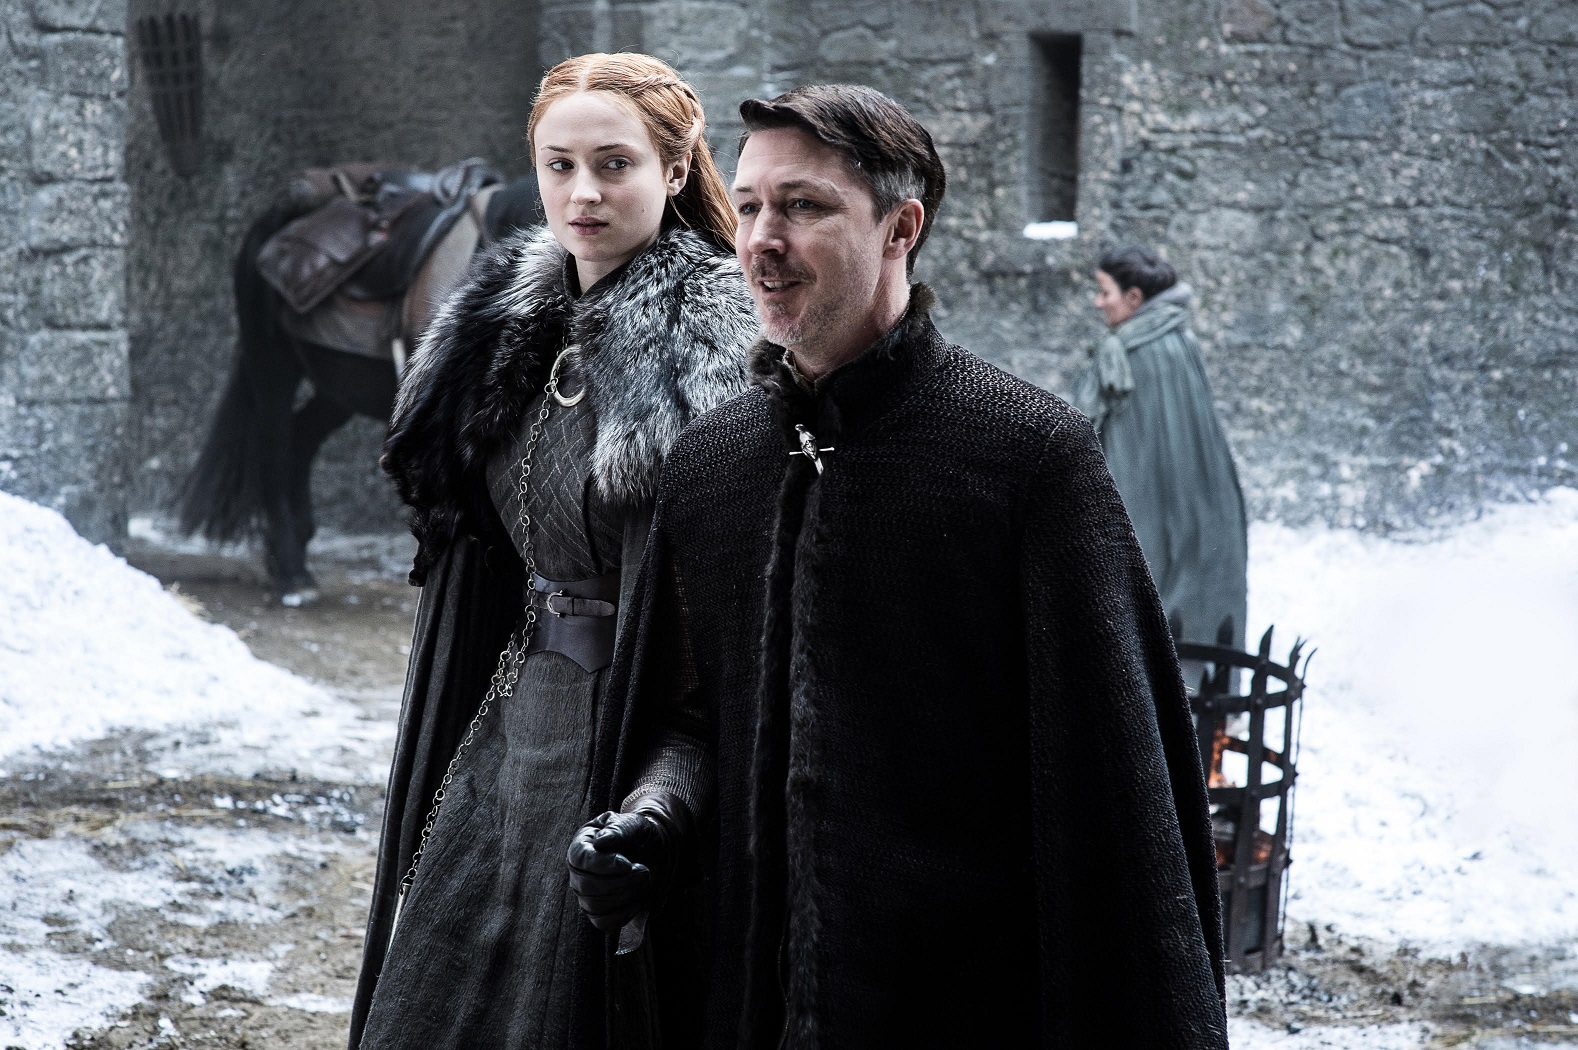 Sophie Turner as Sansa Stark and Aidan Gillen as Petyr Baelish. Photo: HBO